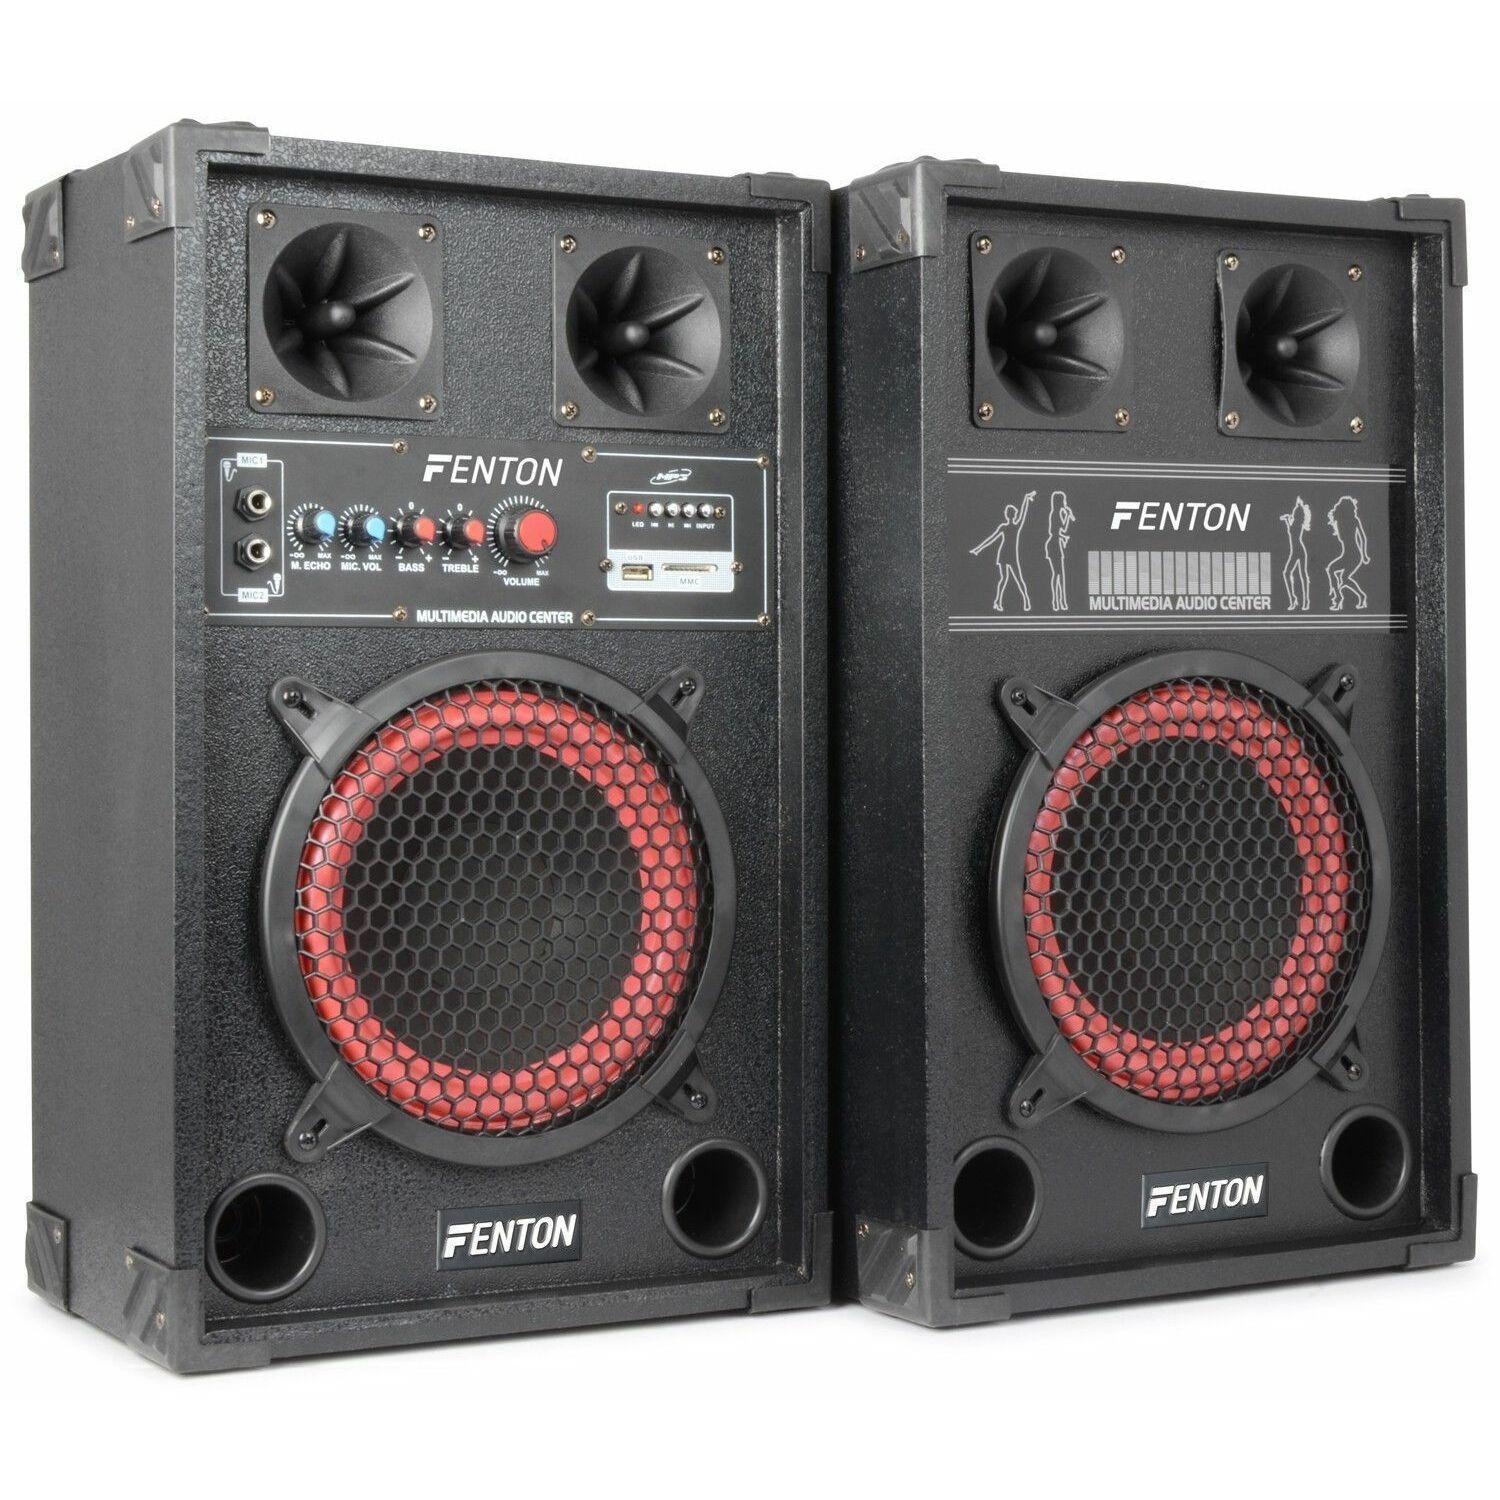 Retourdeal - Fenton SPB-8 Actieve speakerset 8" 400W met Bluetooth